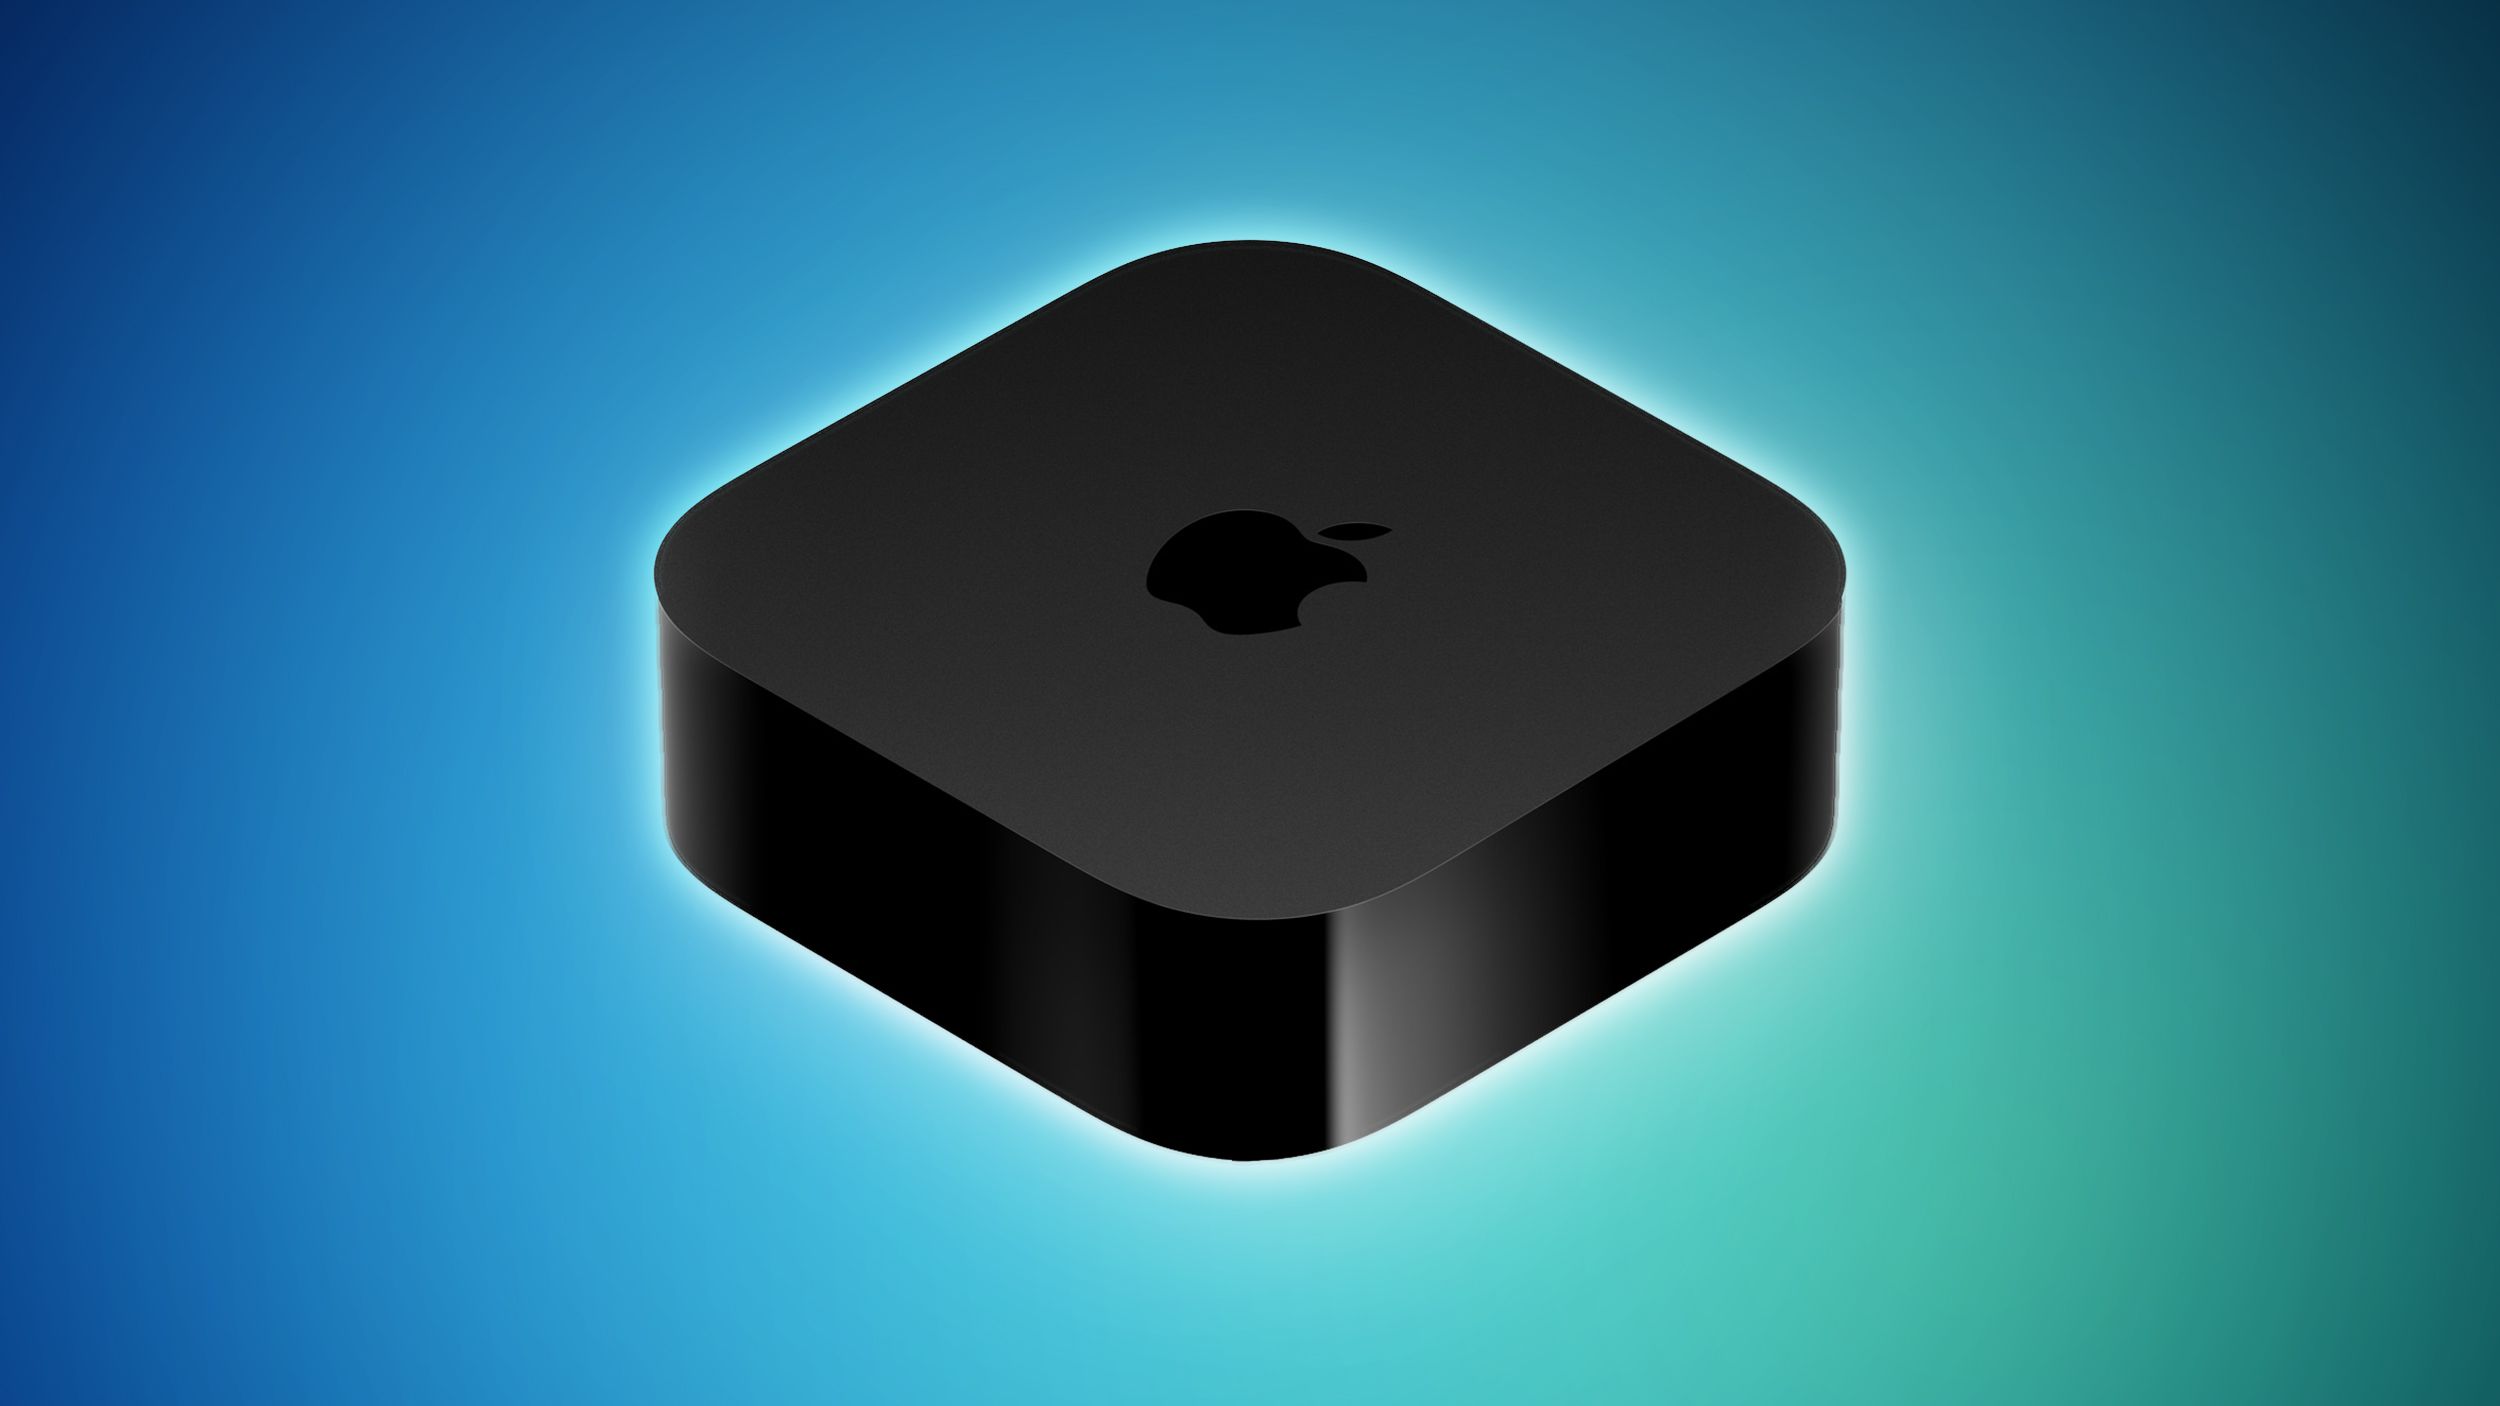 sjælden snemand i morgen Apple TV: Should You Buy? Features, Reviews, and More